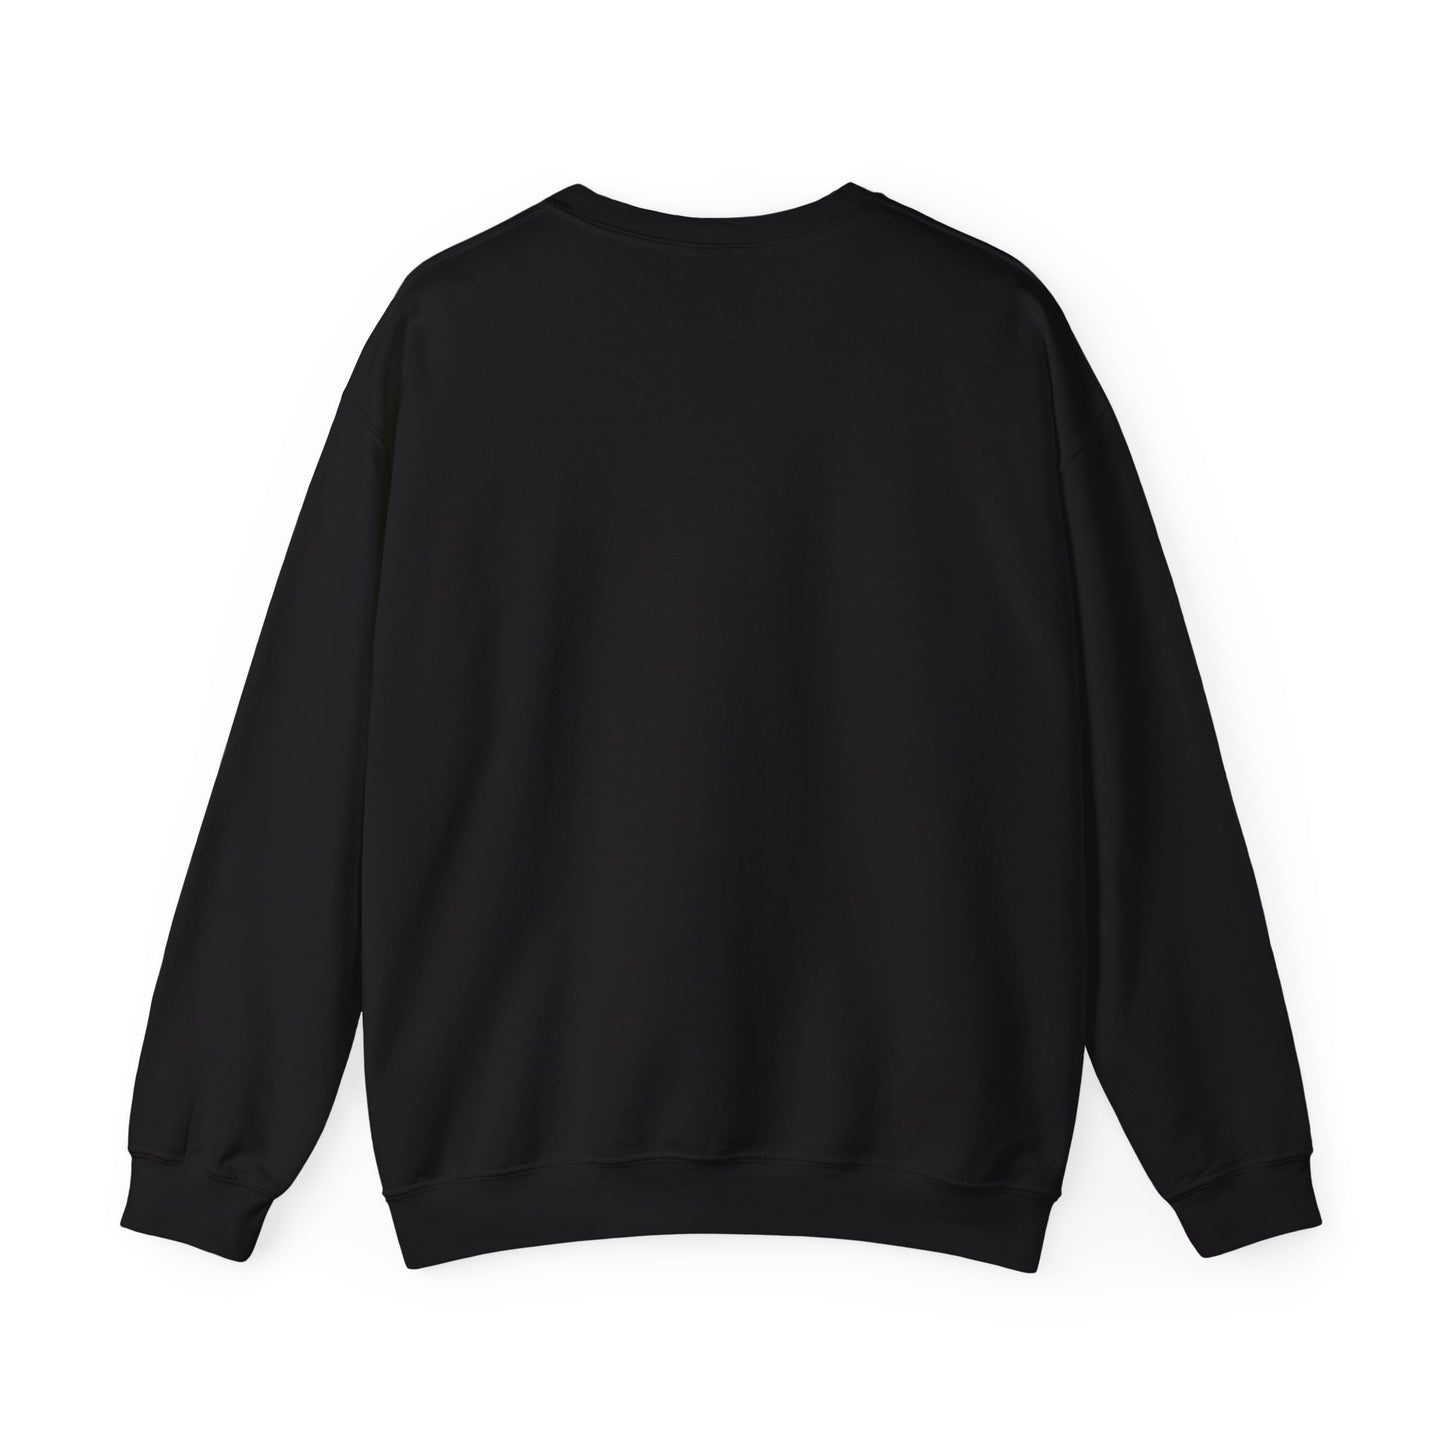 Nadia’s Paige® Unisex Heavy Blend™ Crewneck Sweatshirt